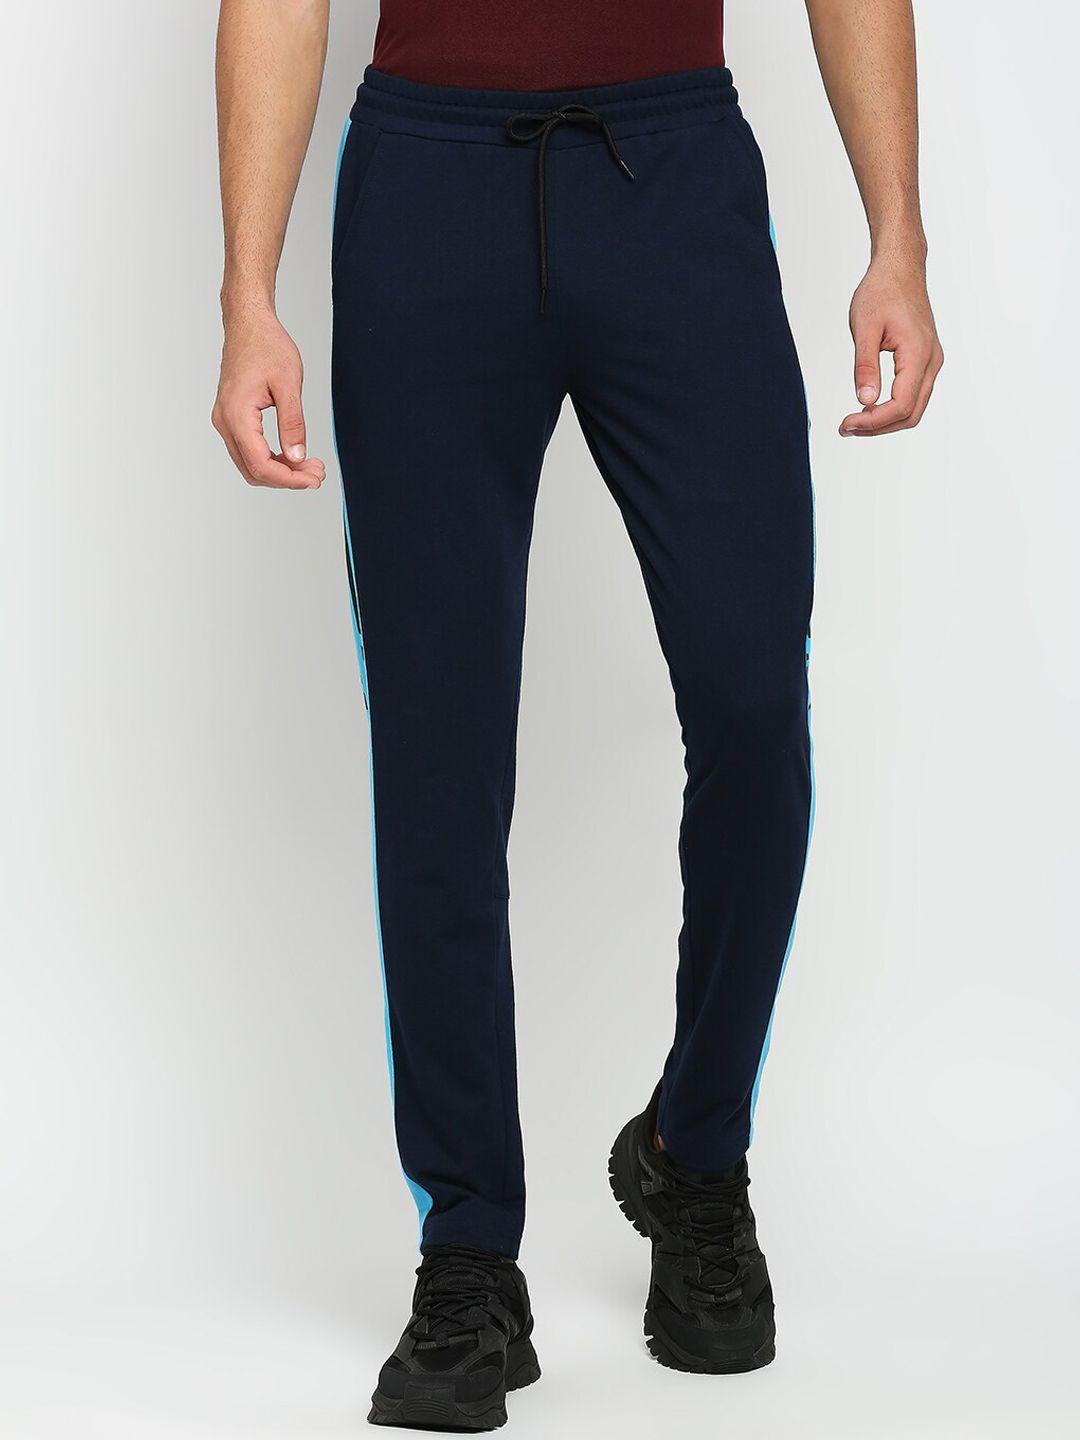 fitz men navy blue solid side stripe detail anti odour slim fit track pant